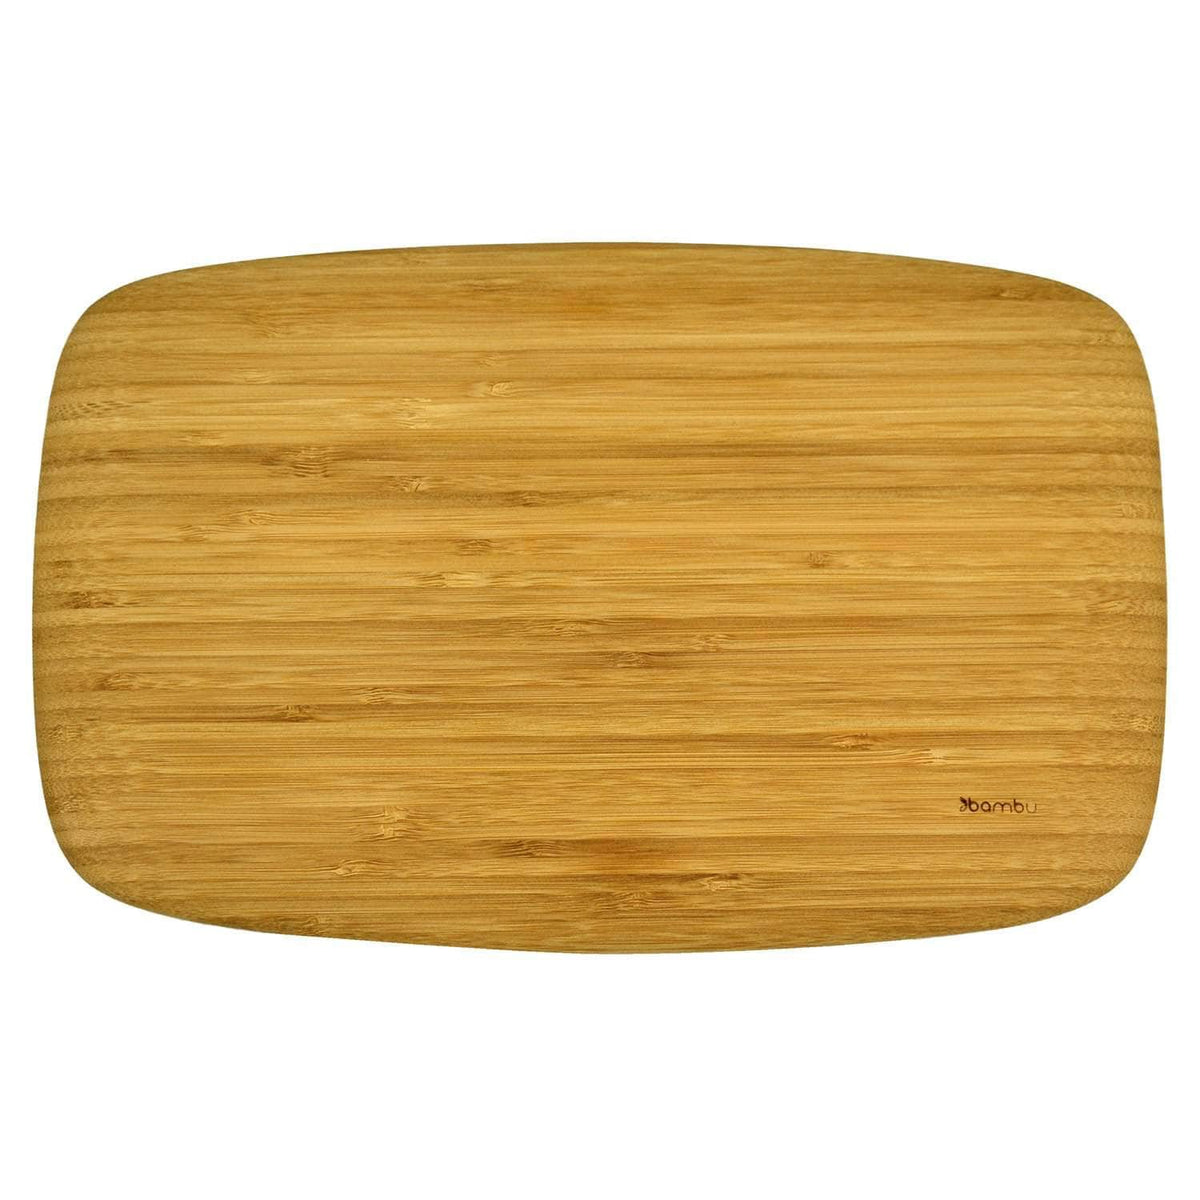 *NEW* Classic bamboo cutting &amp; serving boards Medium